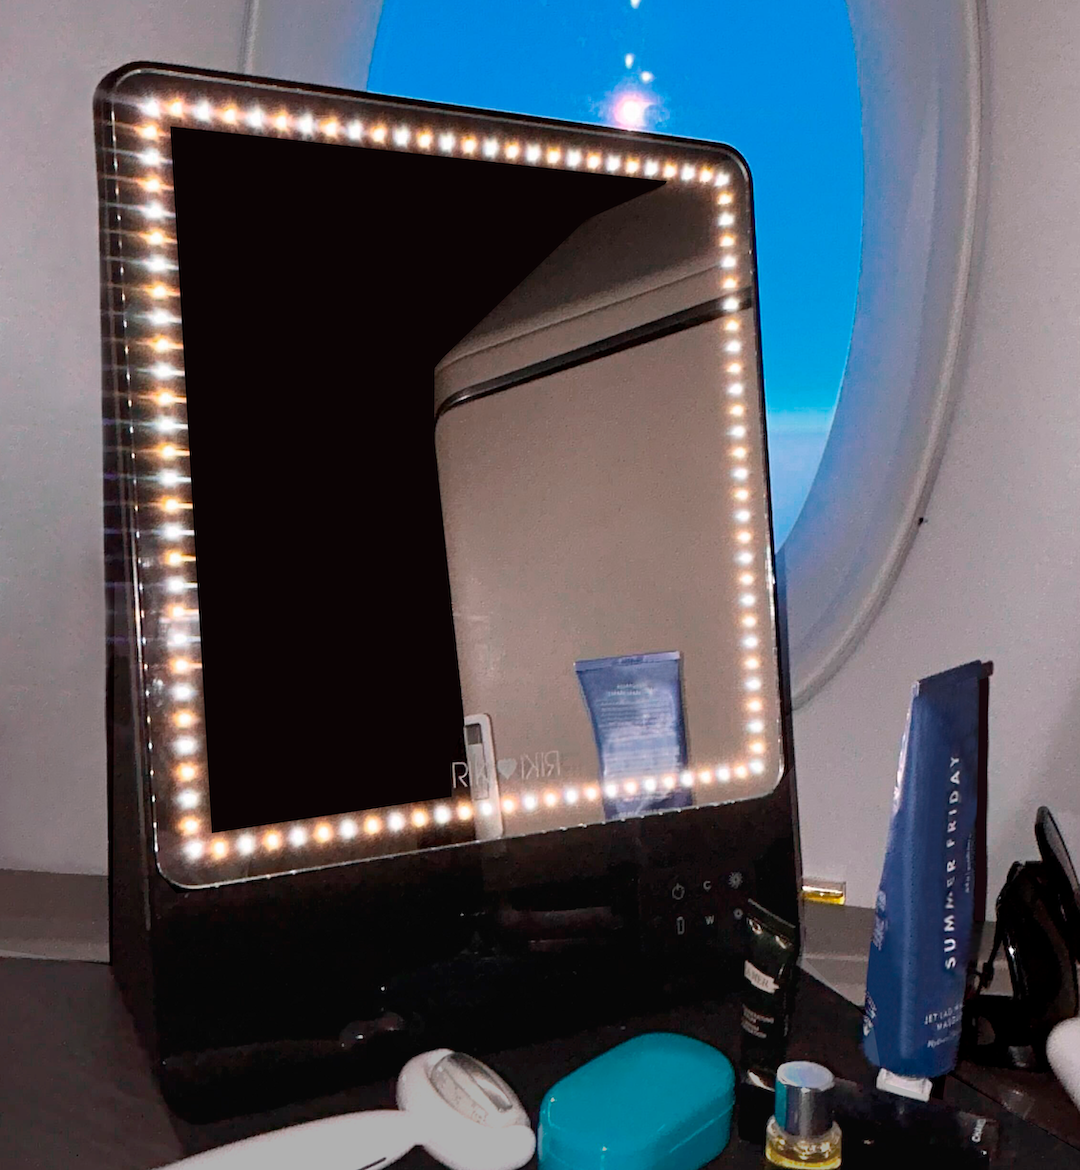 RIKI SKINNY ECO Glam On-the-Glow Set, your ultimate beauty companion